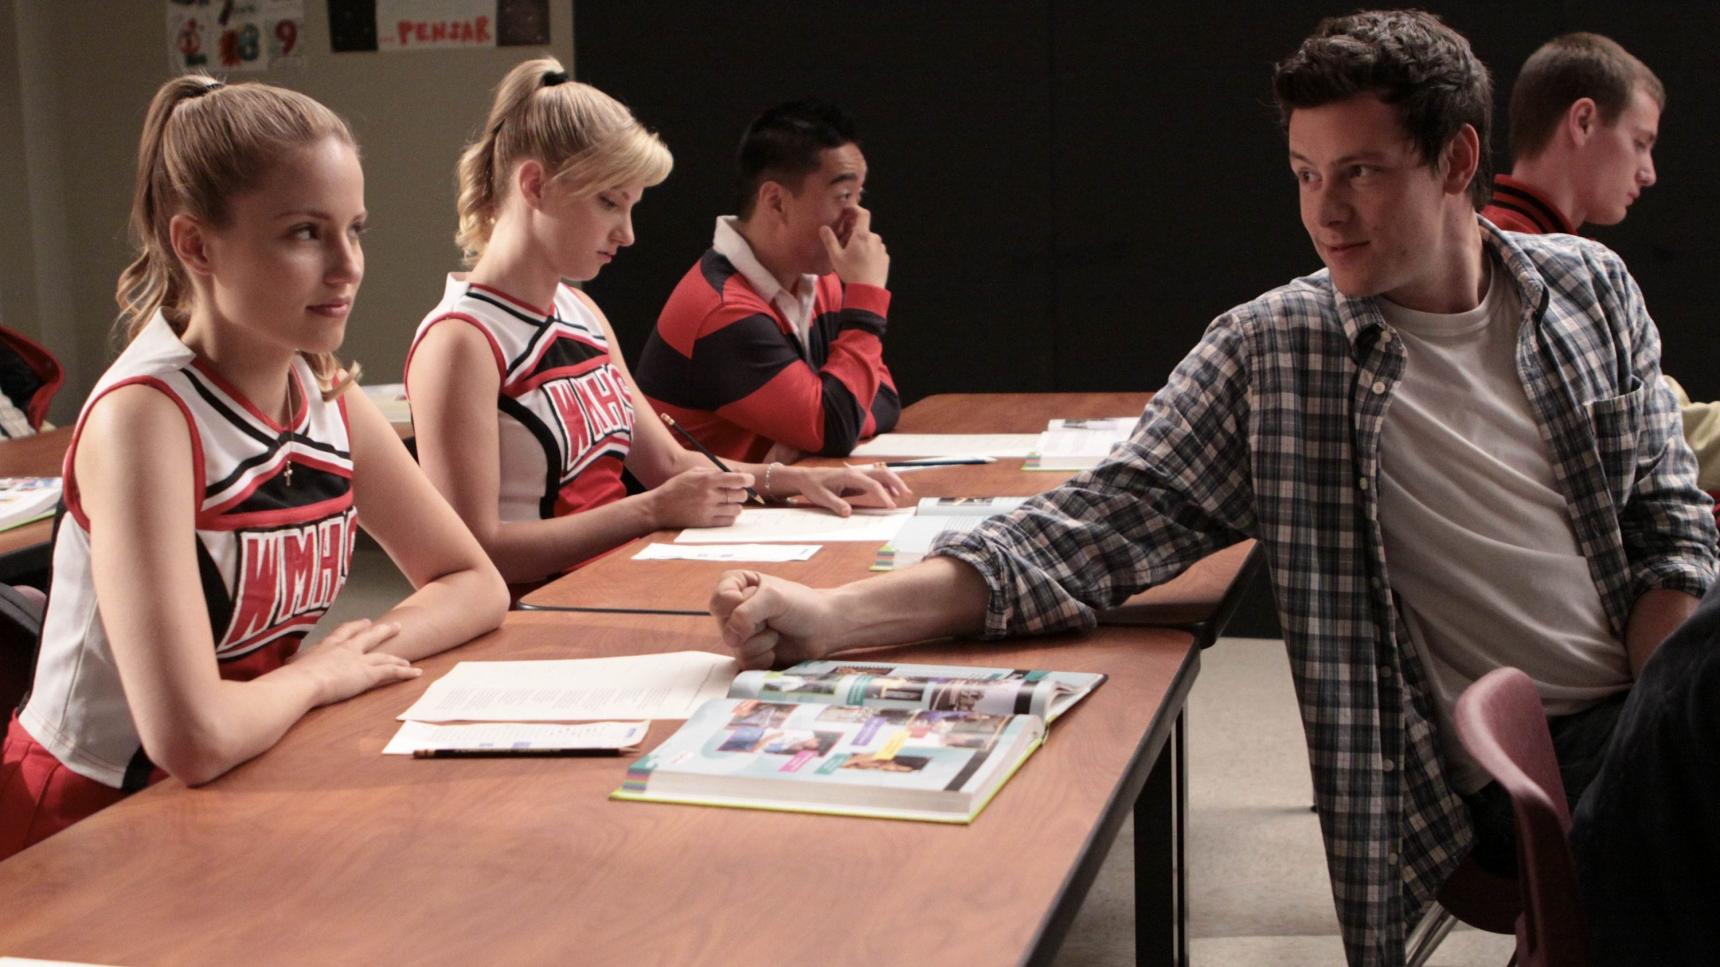 Poster del episodio 7 de Glee online